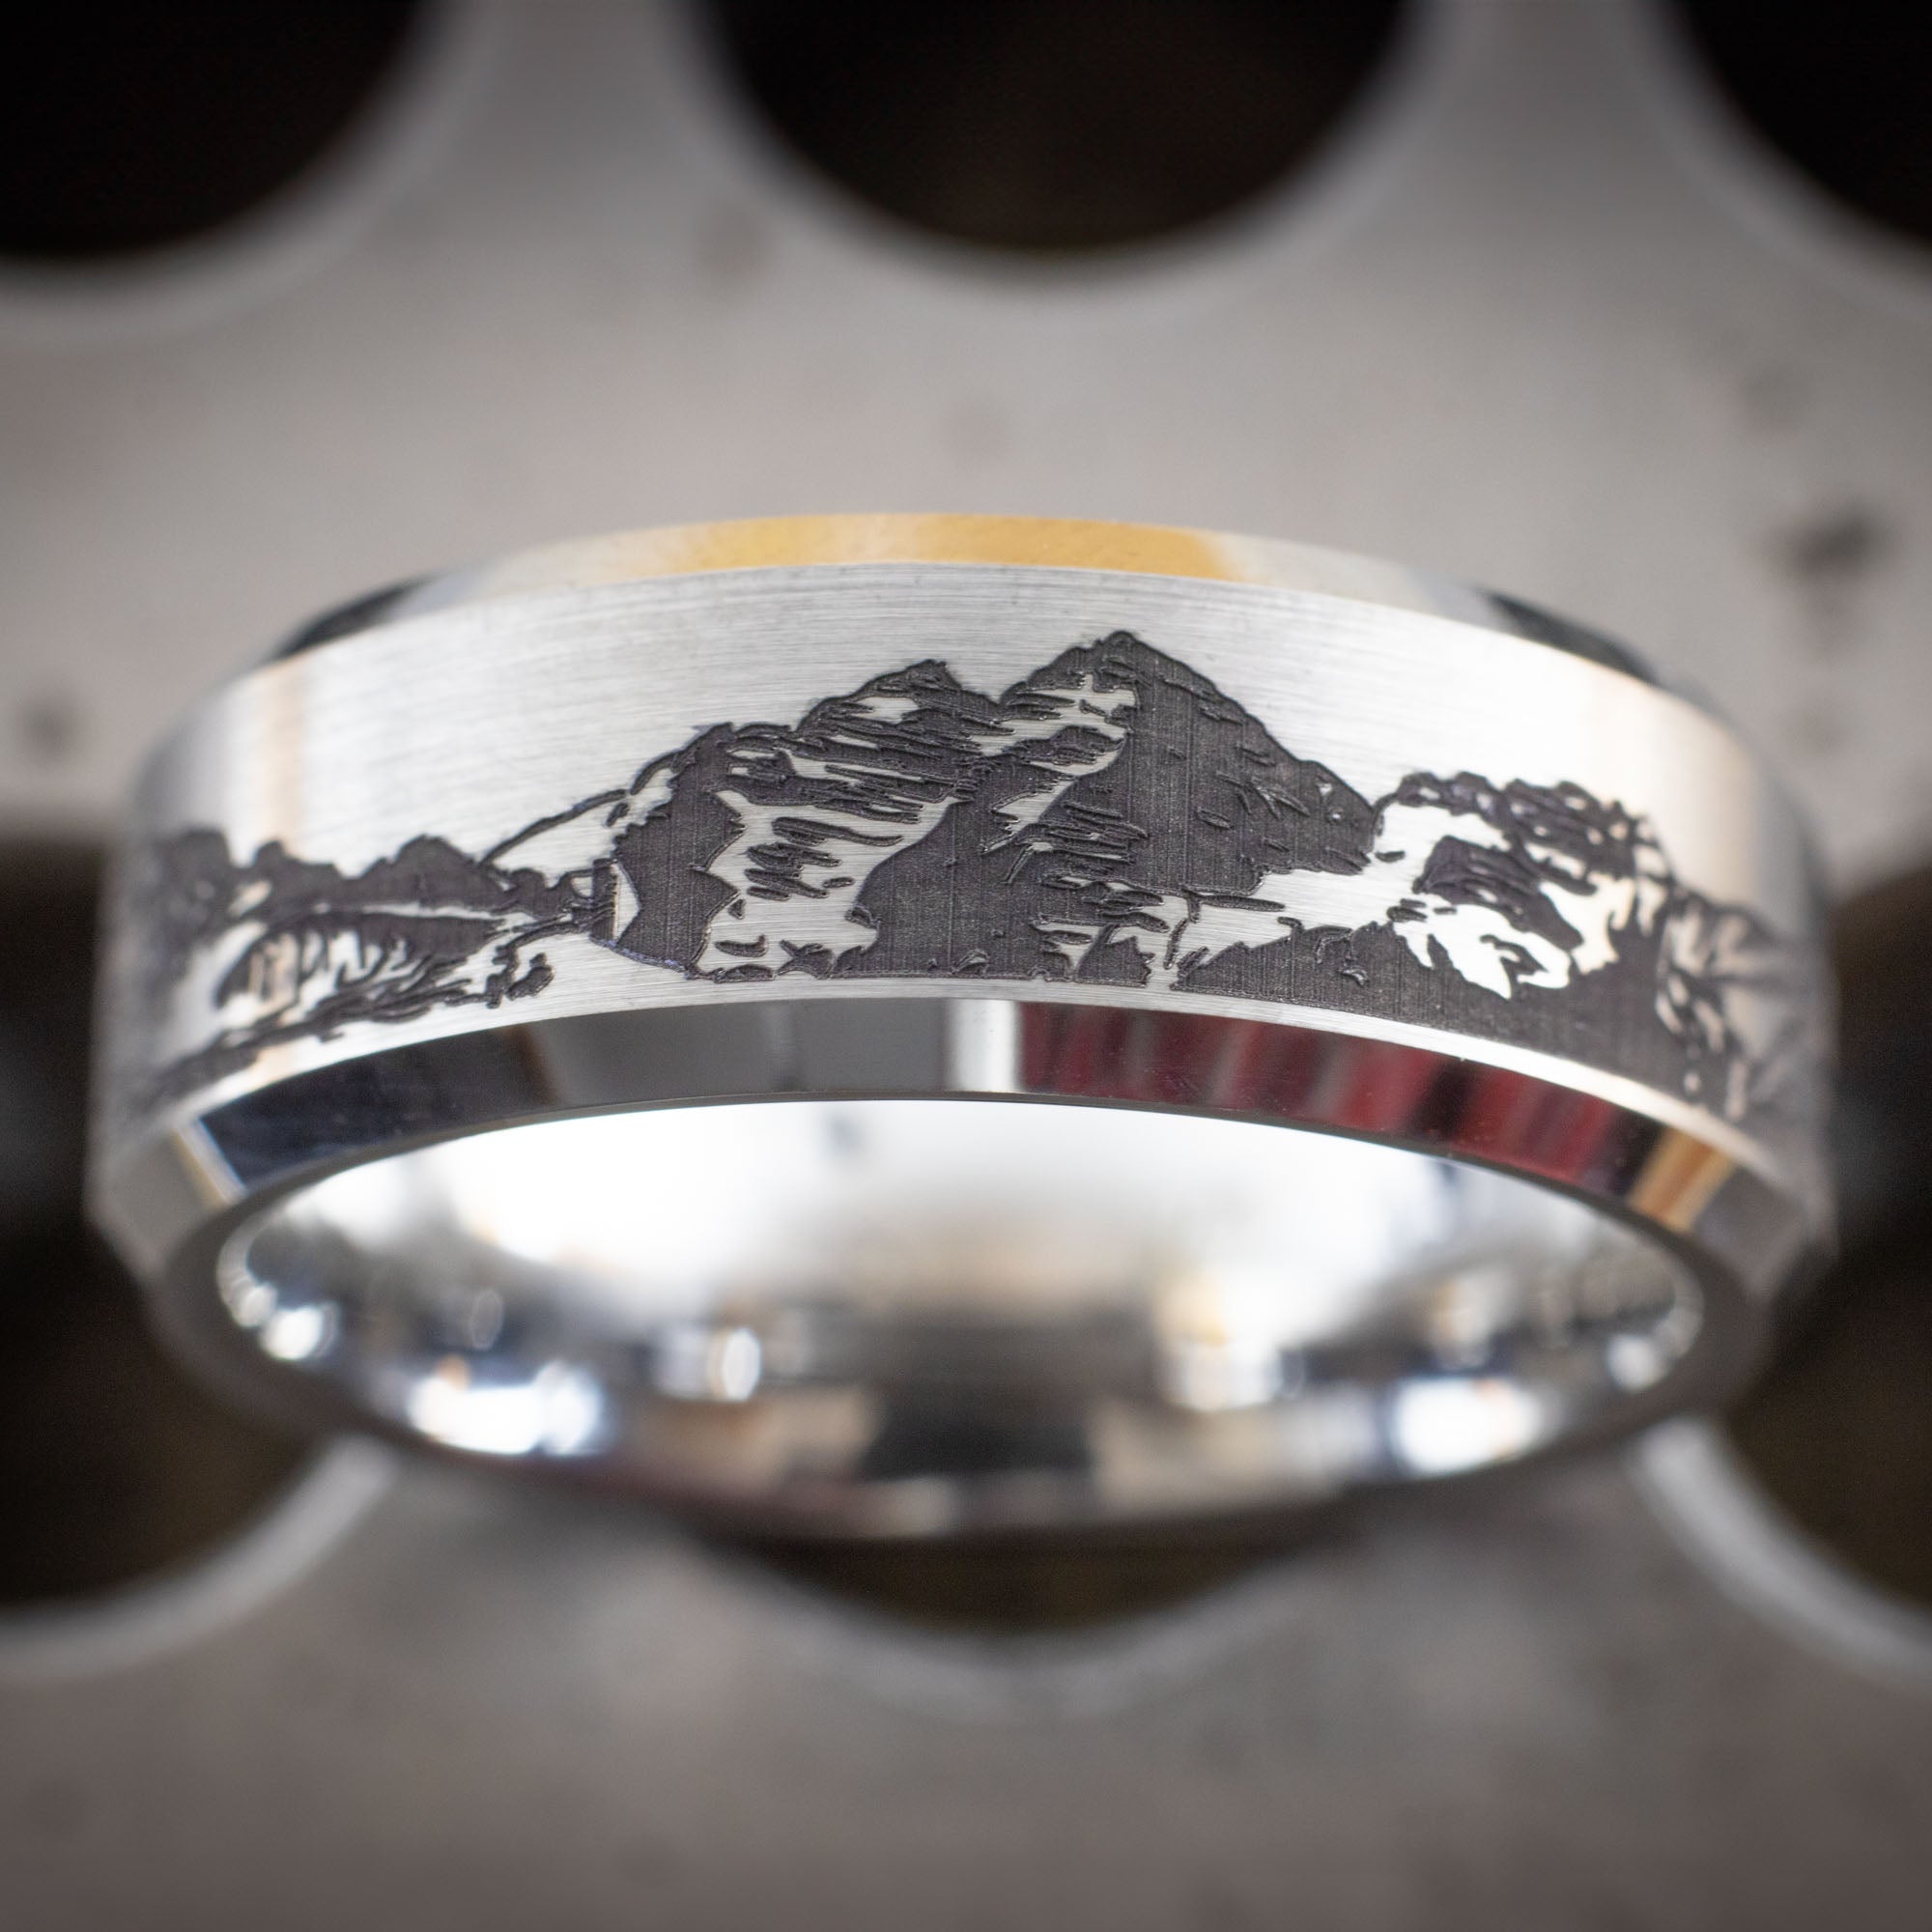 Beveled Tungsten Engraved Colorado 14er Ring